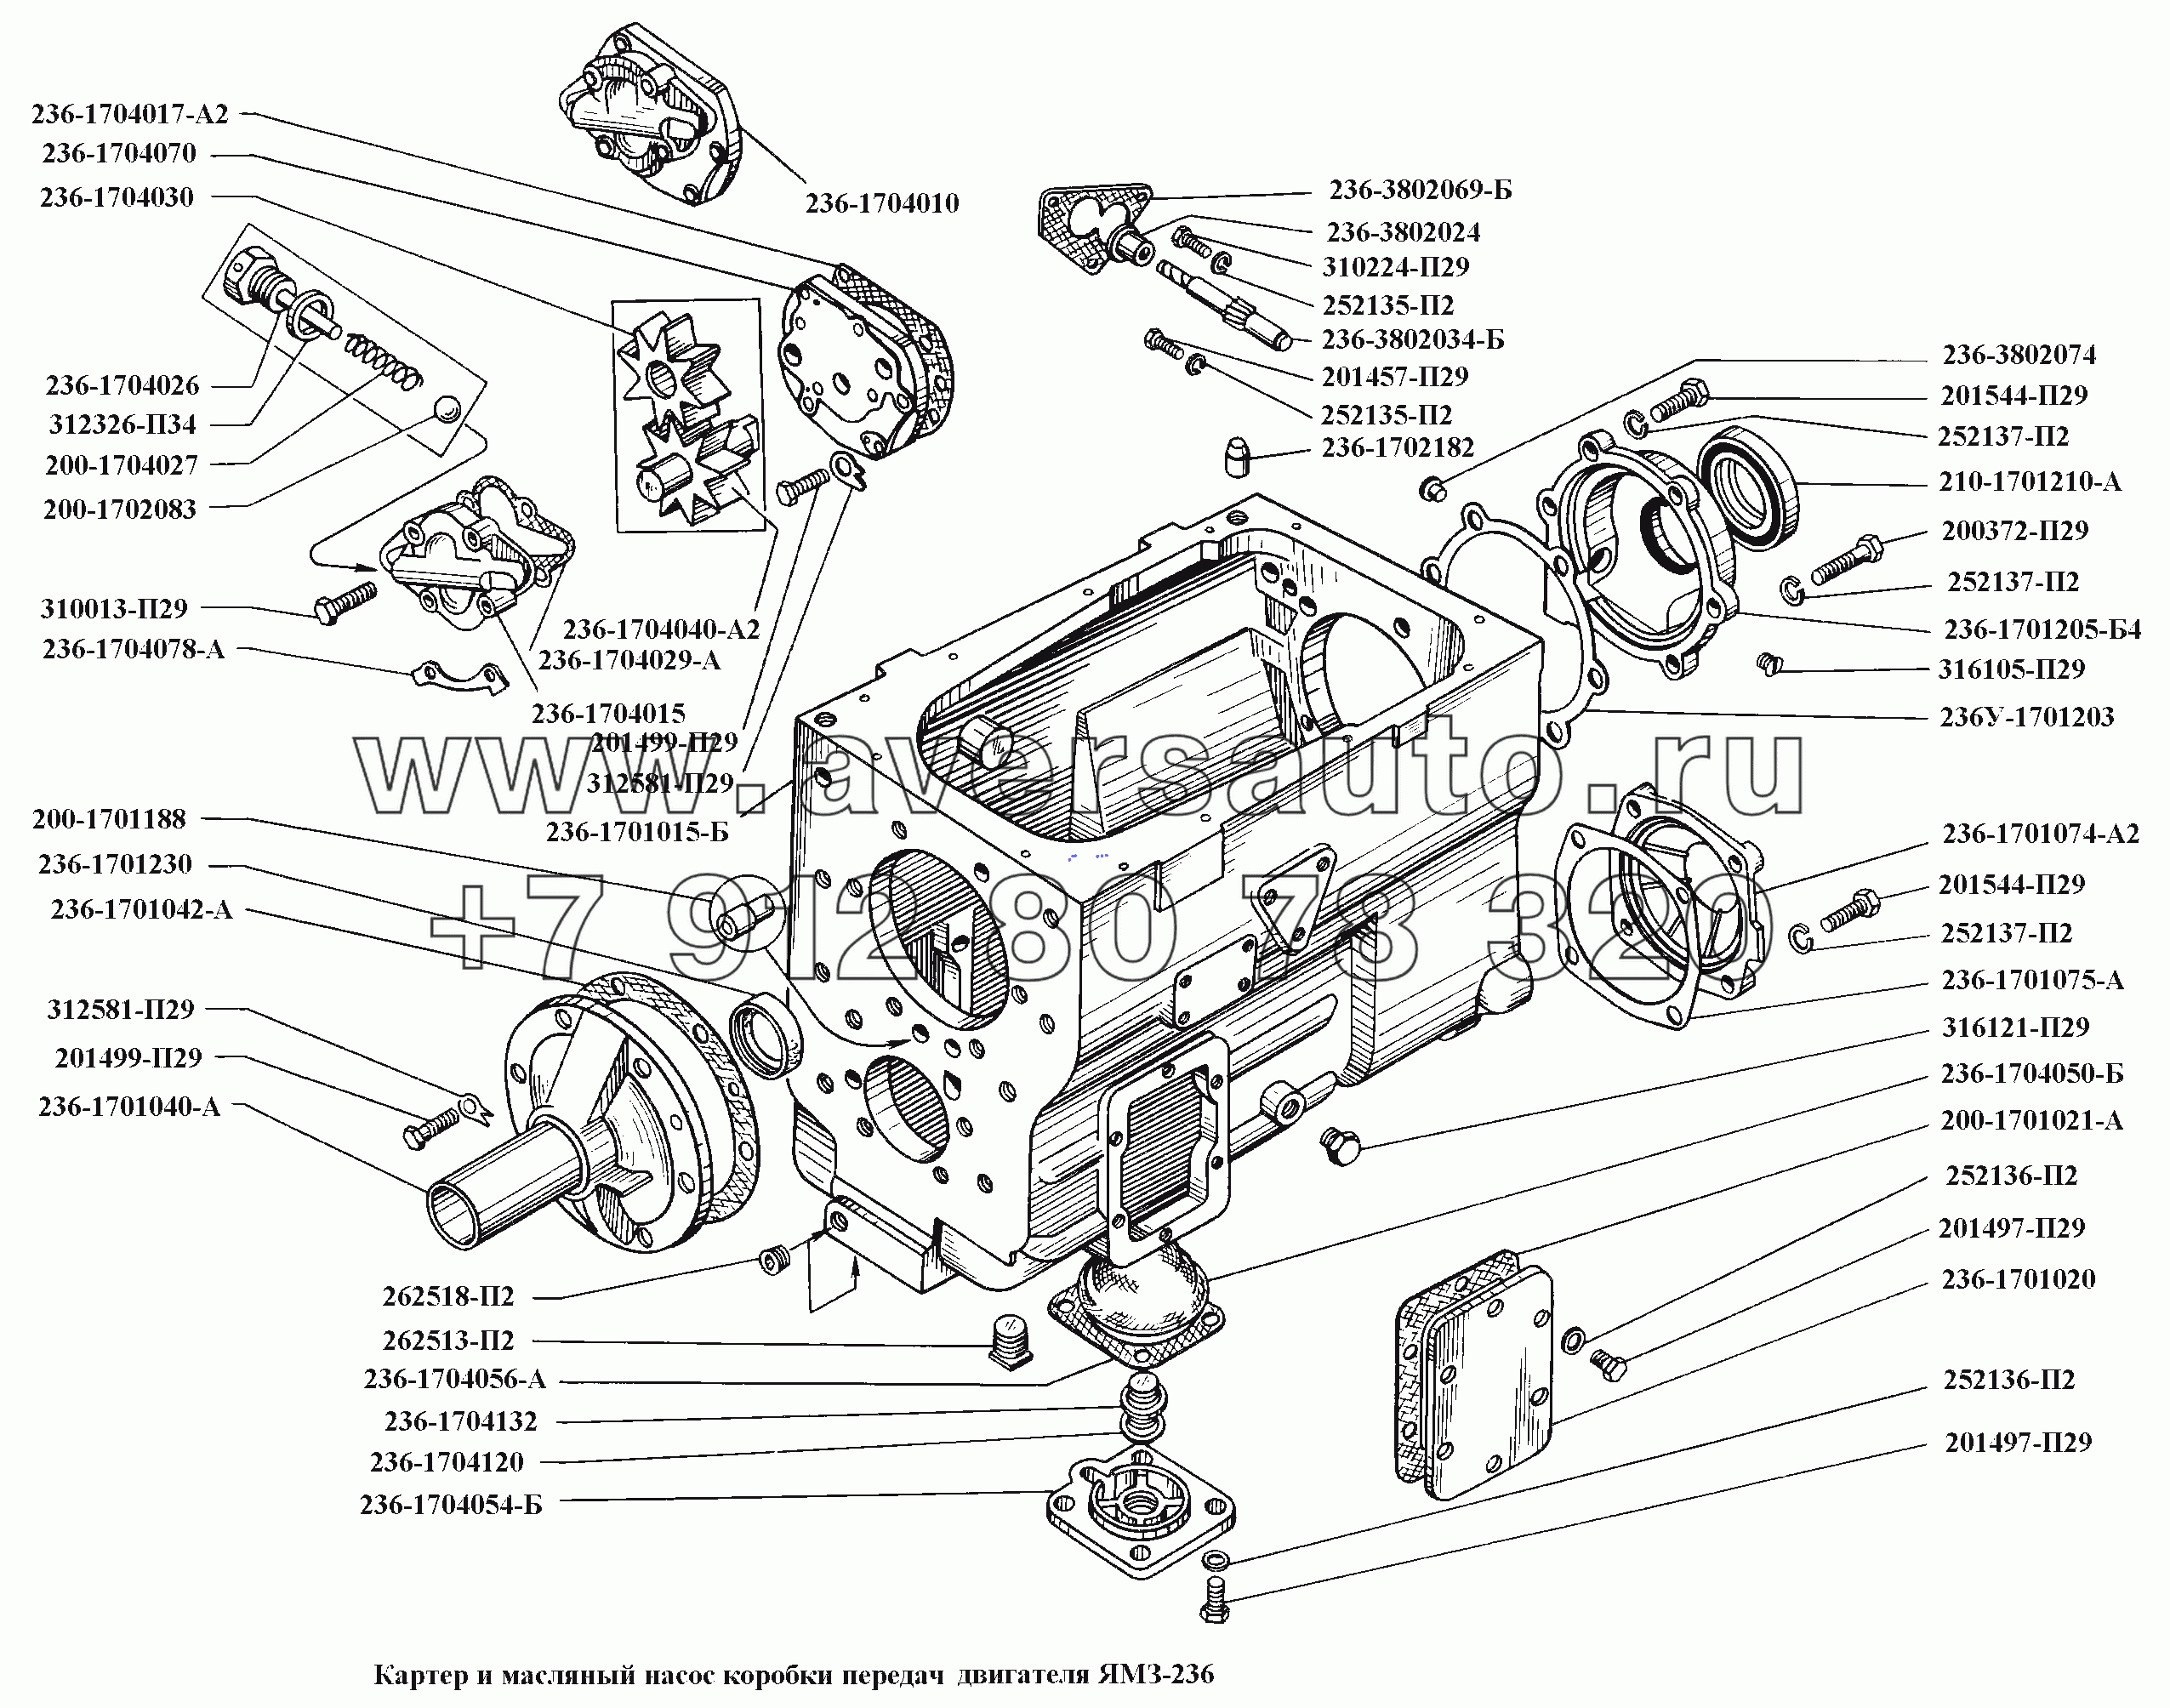 Картер и масляный насос коробки передач двигателя ЯМЗ-236